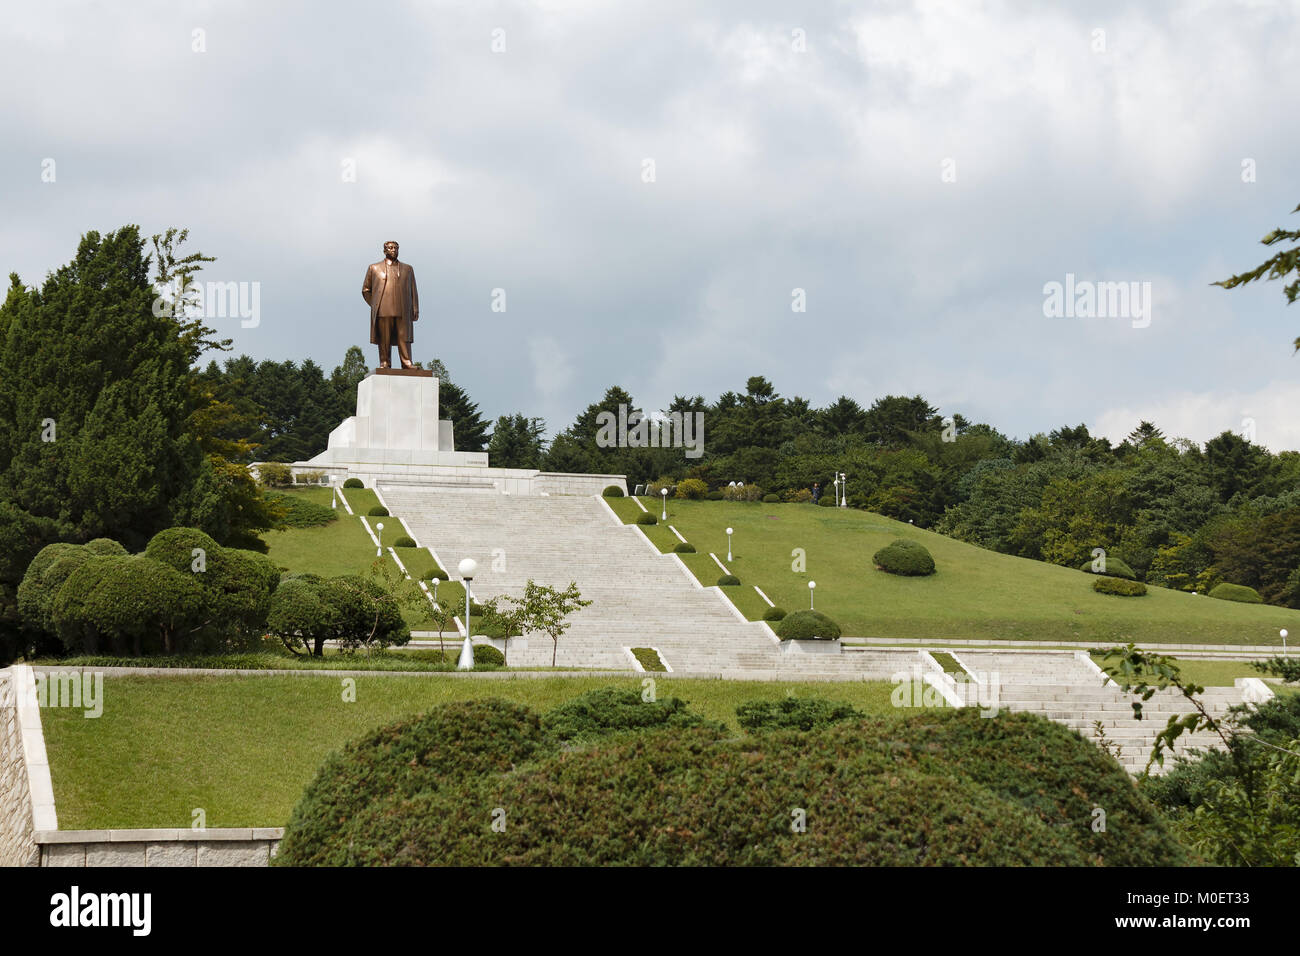 Wonsan, North Korea - July 30, 2014: The monument to Kim Il Sung in Wonsan, North Korea. Stock Photo